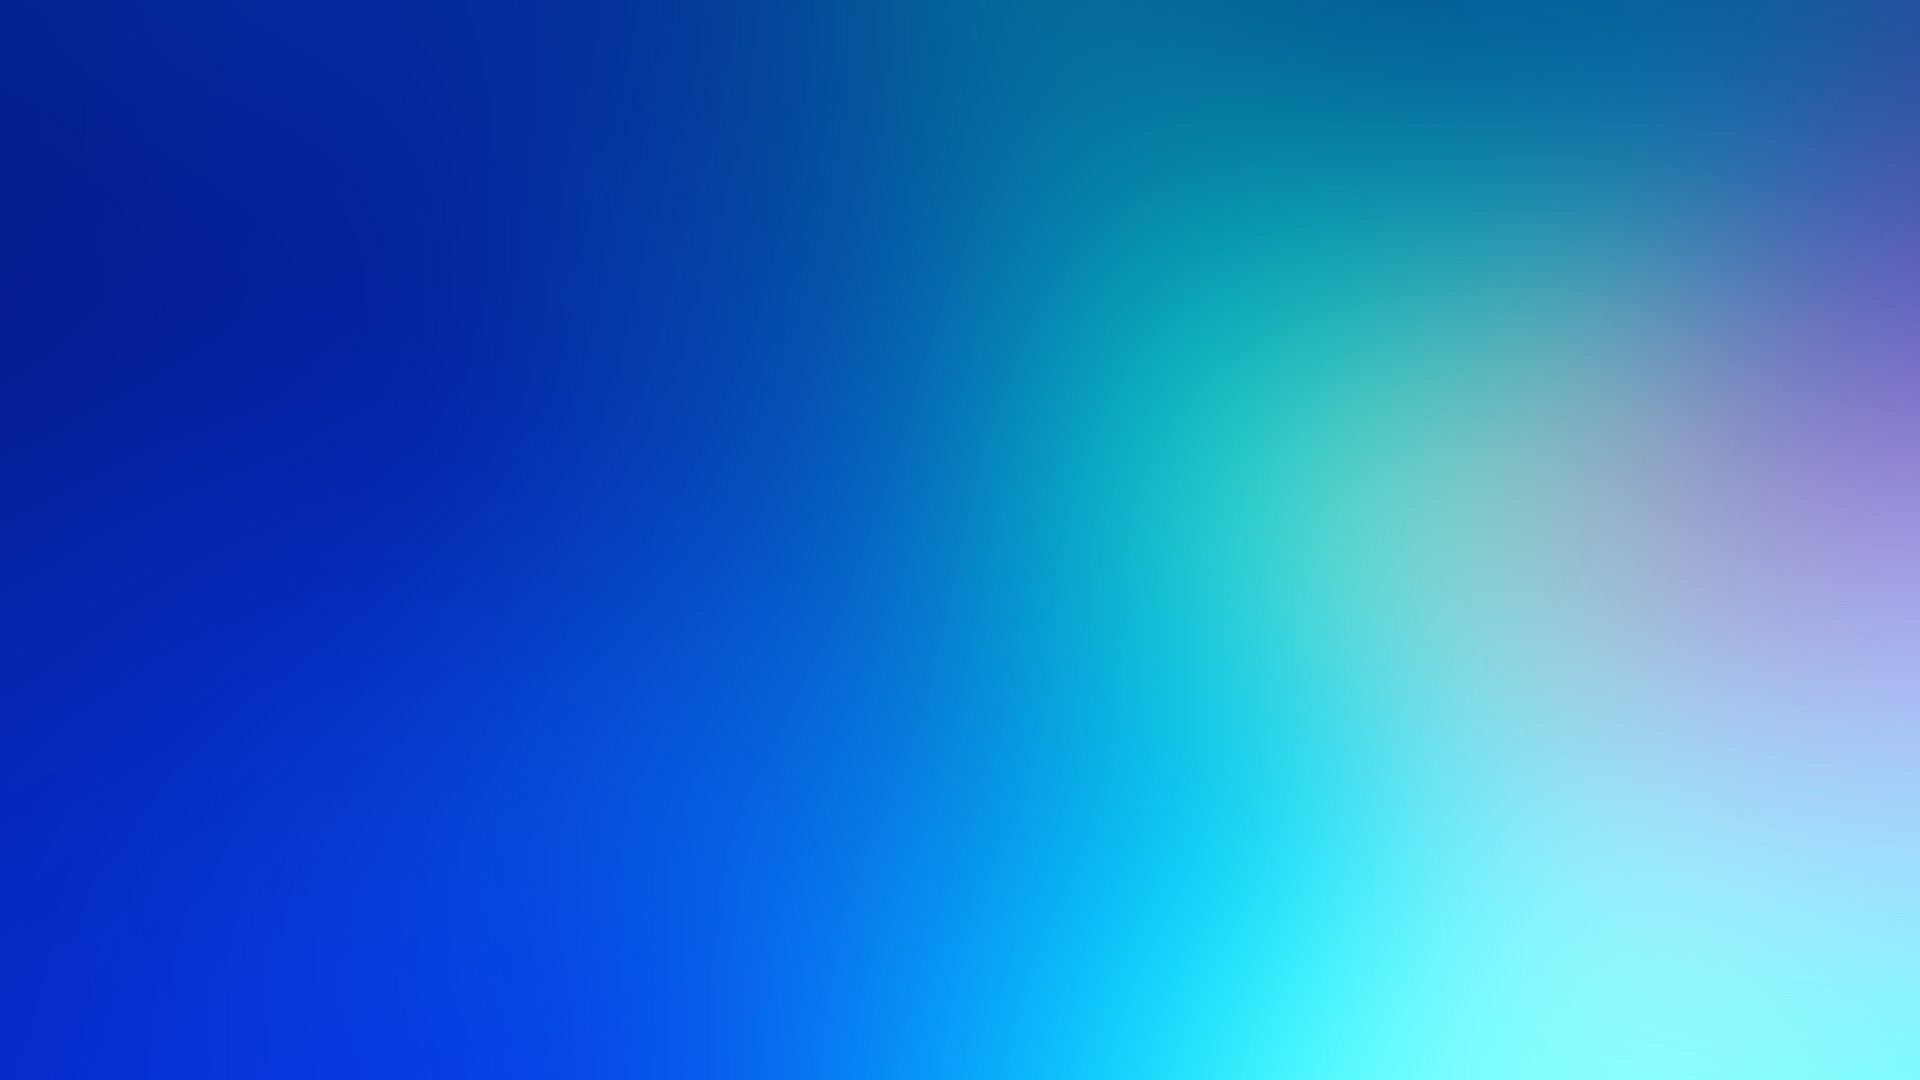 General 1920x1080 colorful blurred Windows 7 gradient blue background minimalism blue